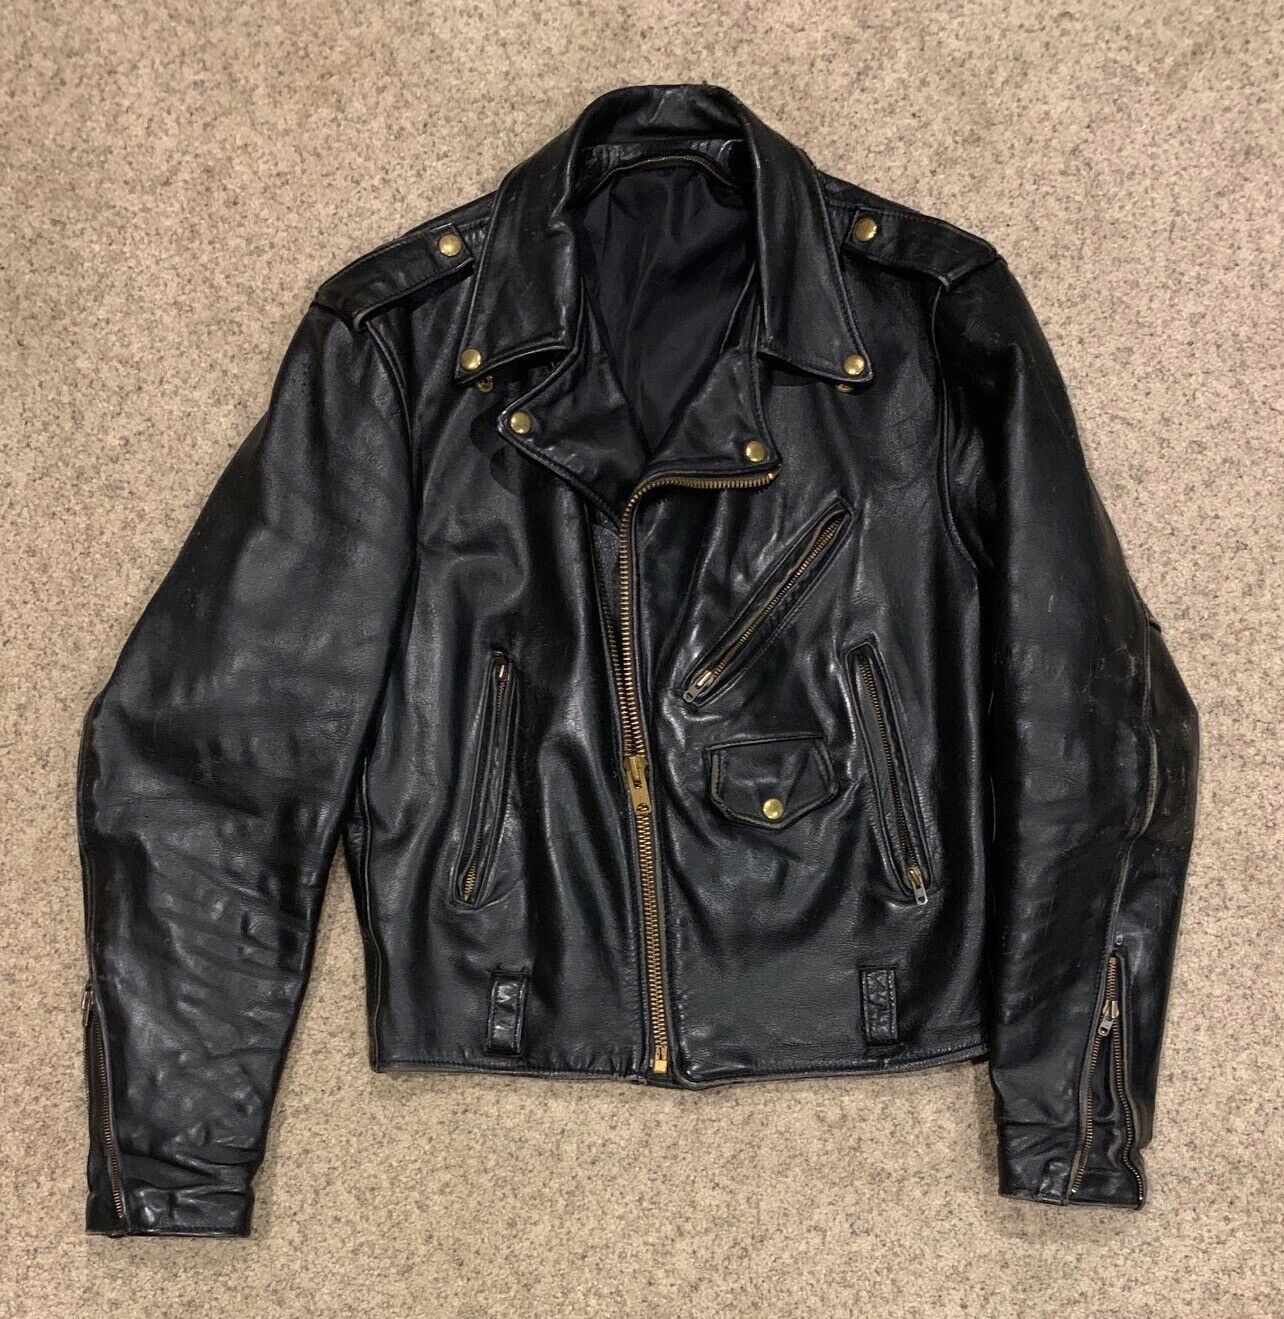 Lesco biker jacket, 40 | The Fedora Lounge